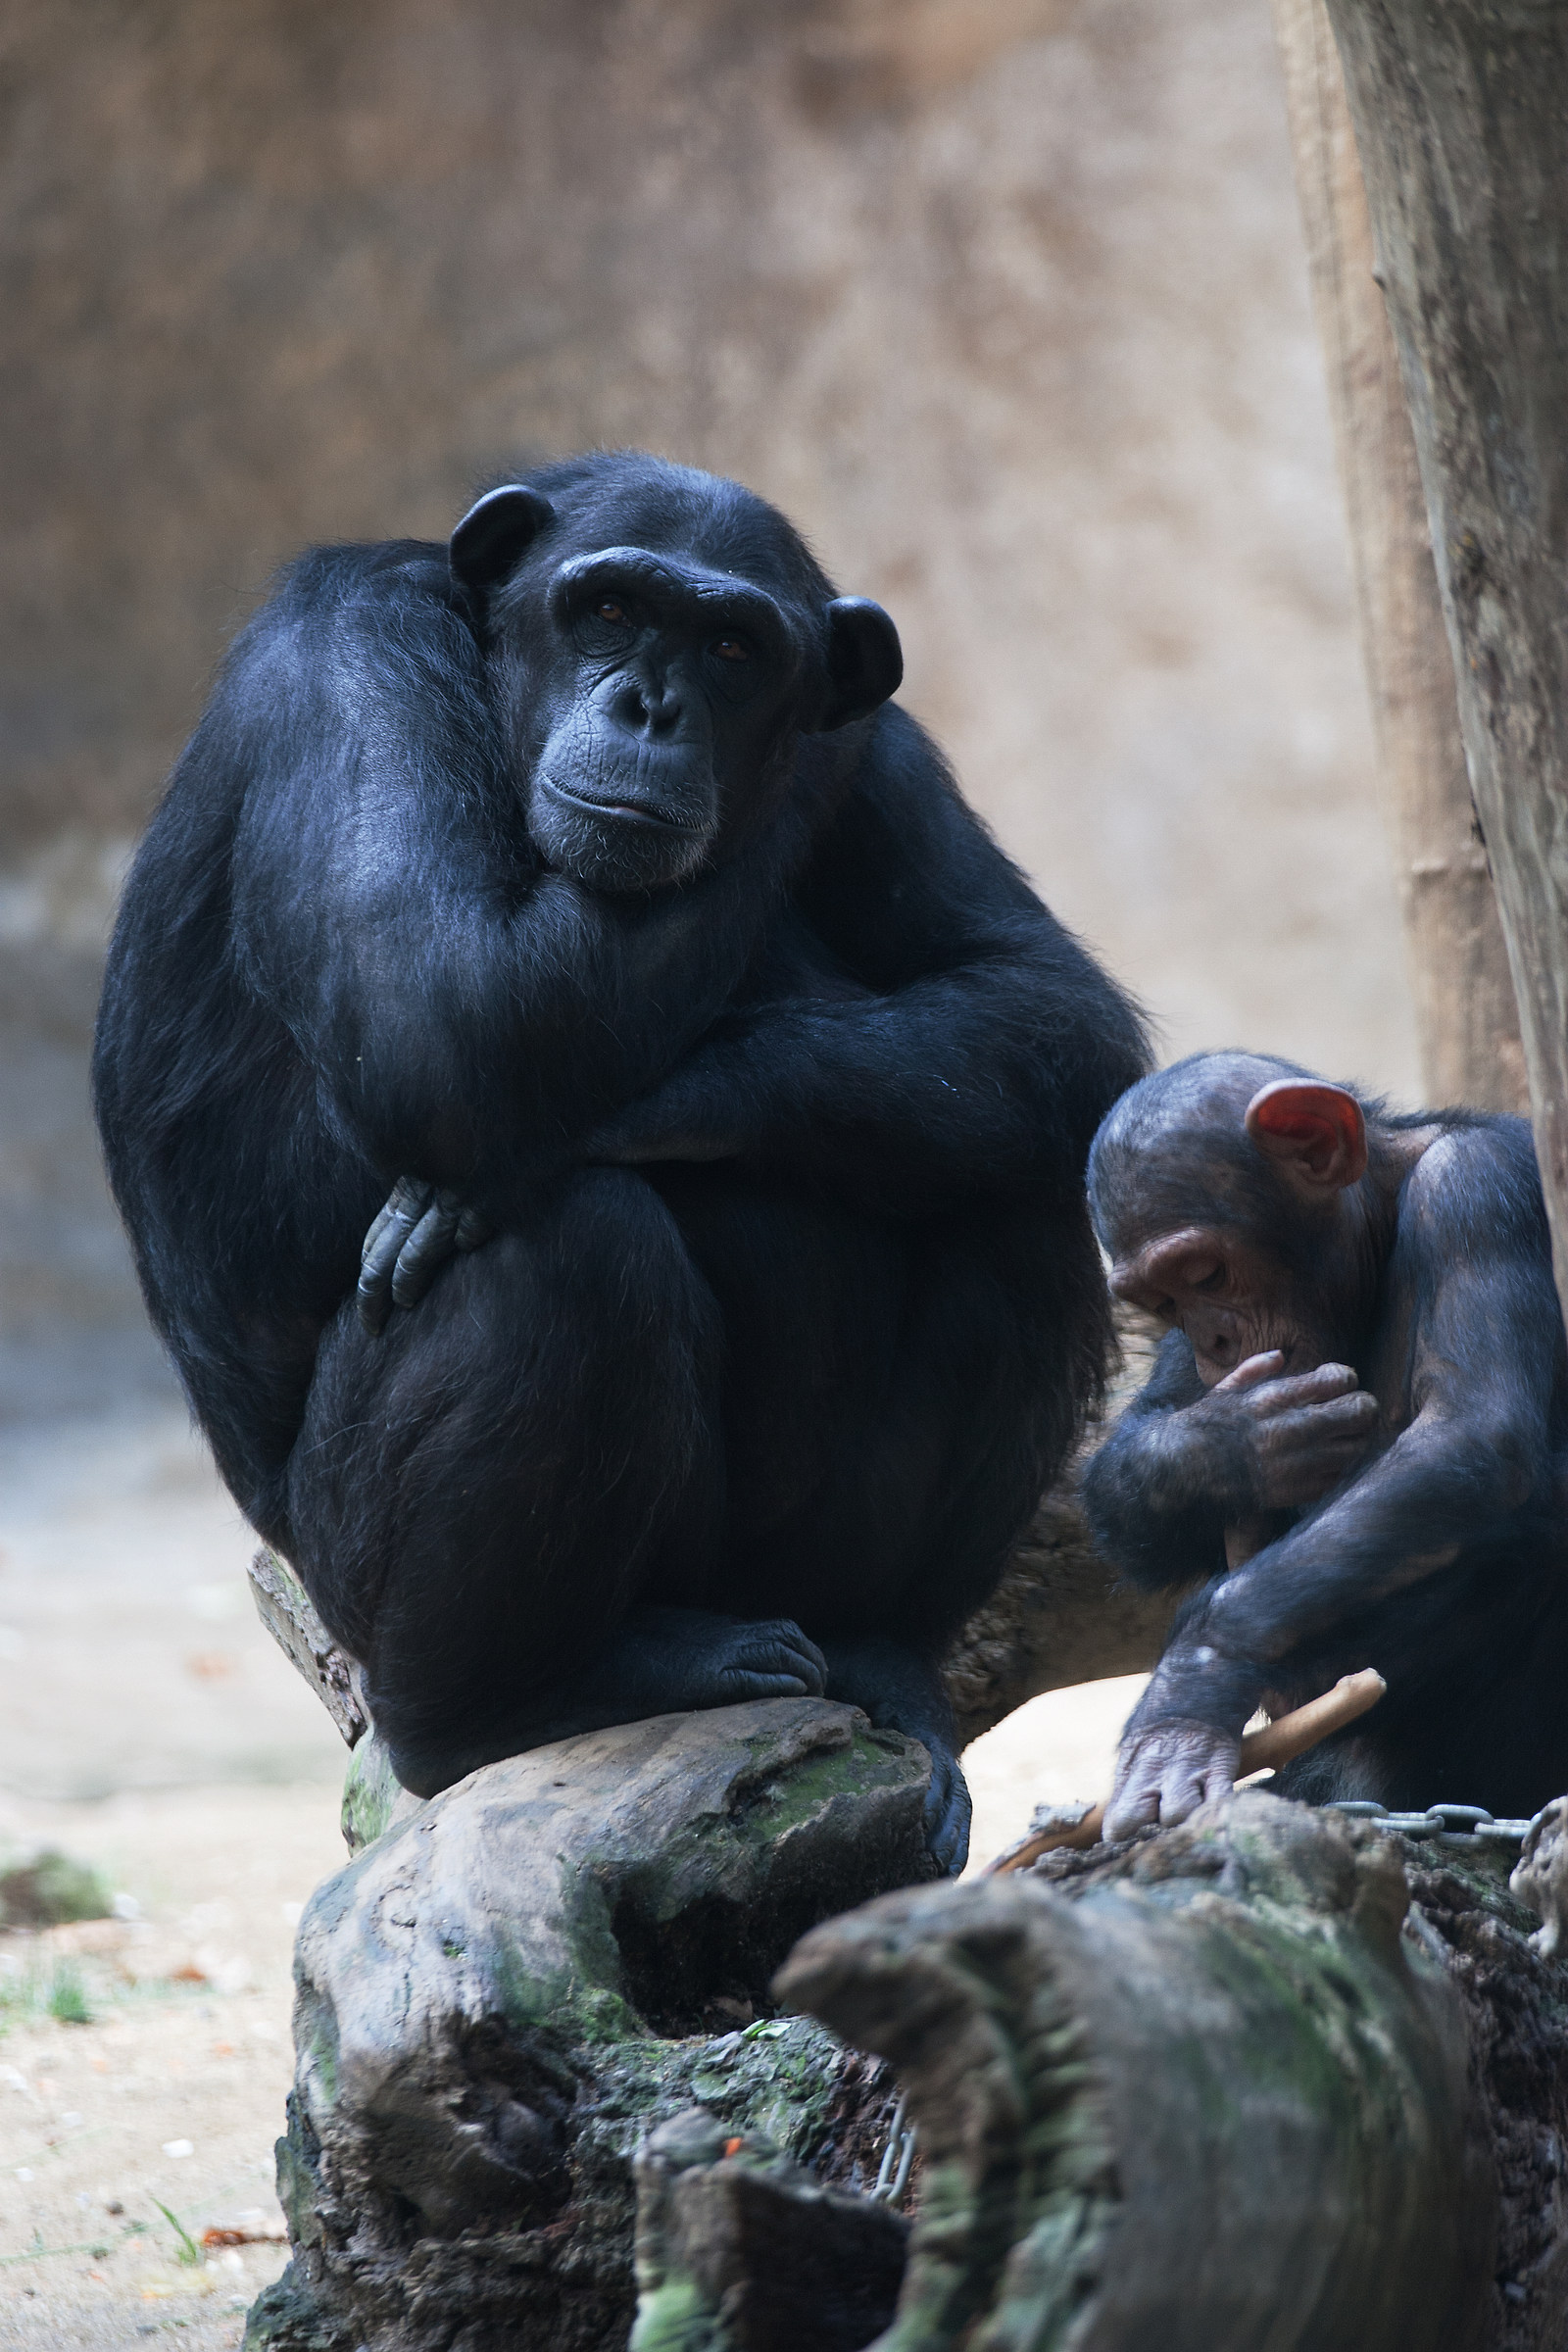 Chimpanzee at the zoo...